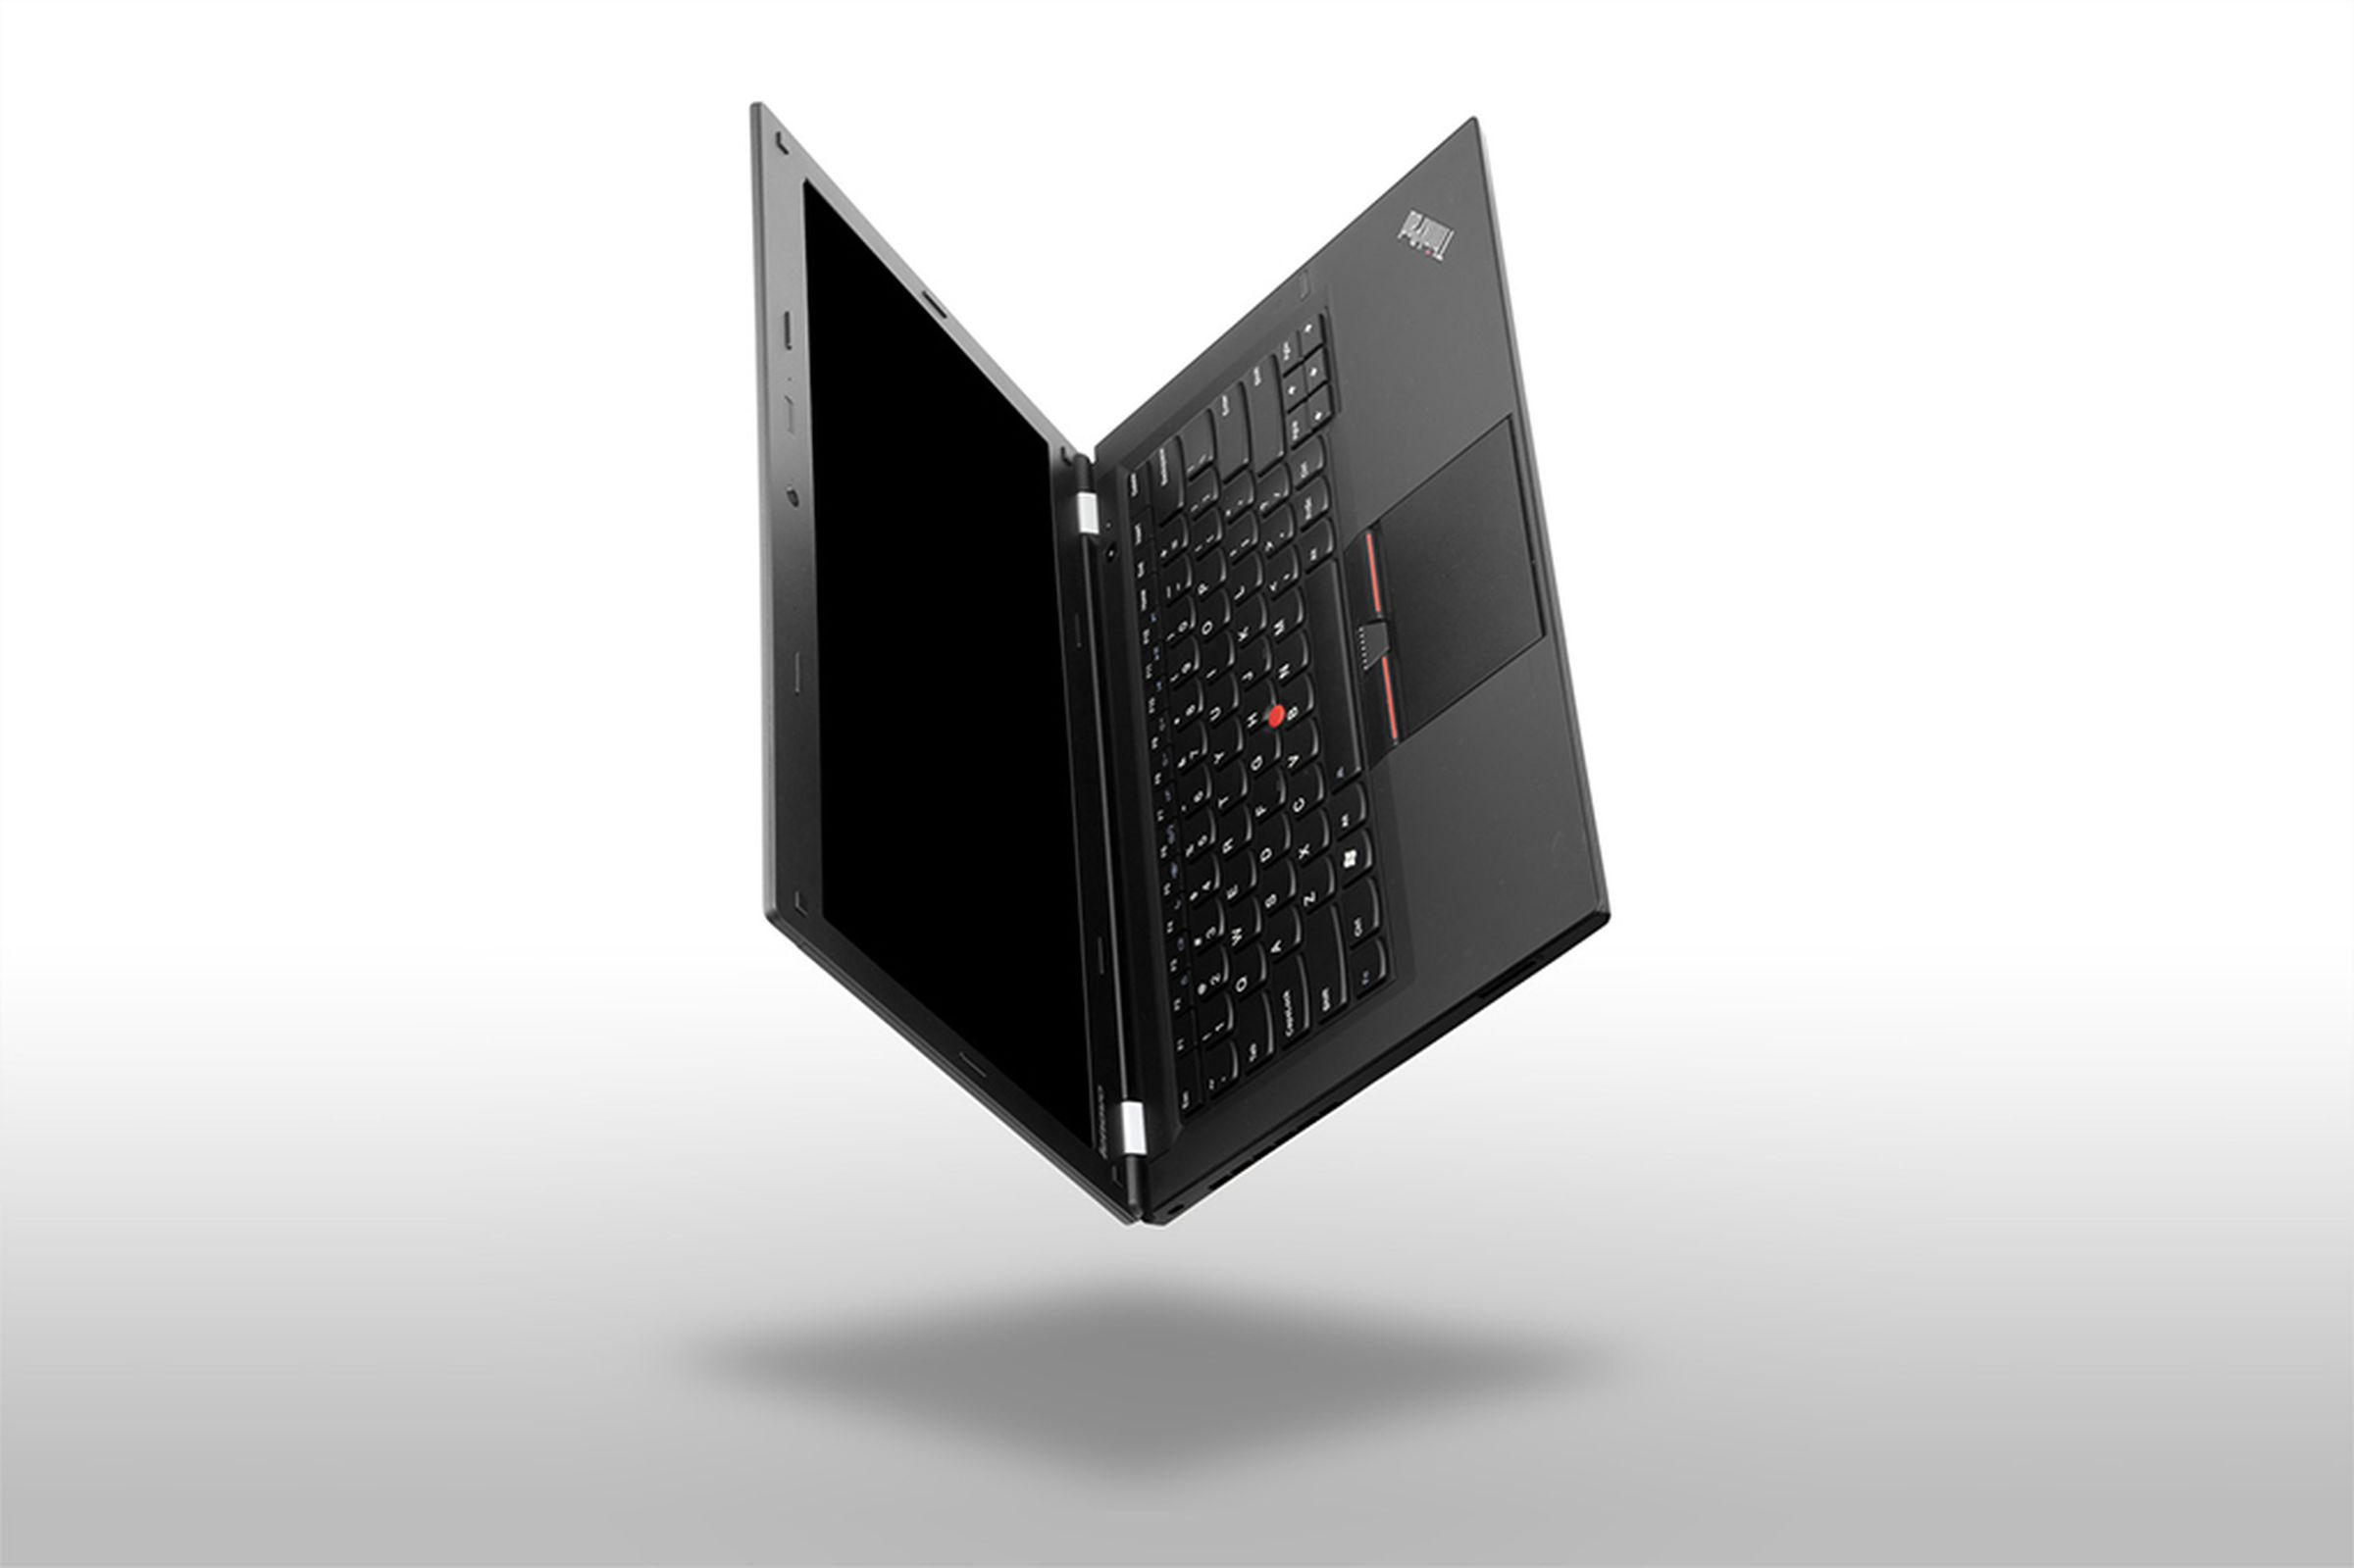 Lenovo ThinkPad T430u press pictures